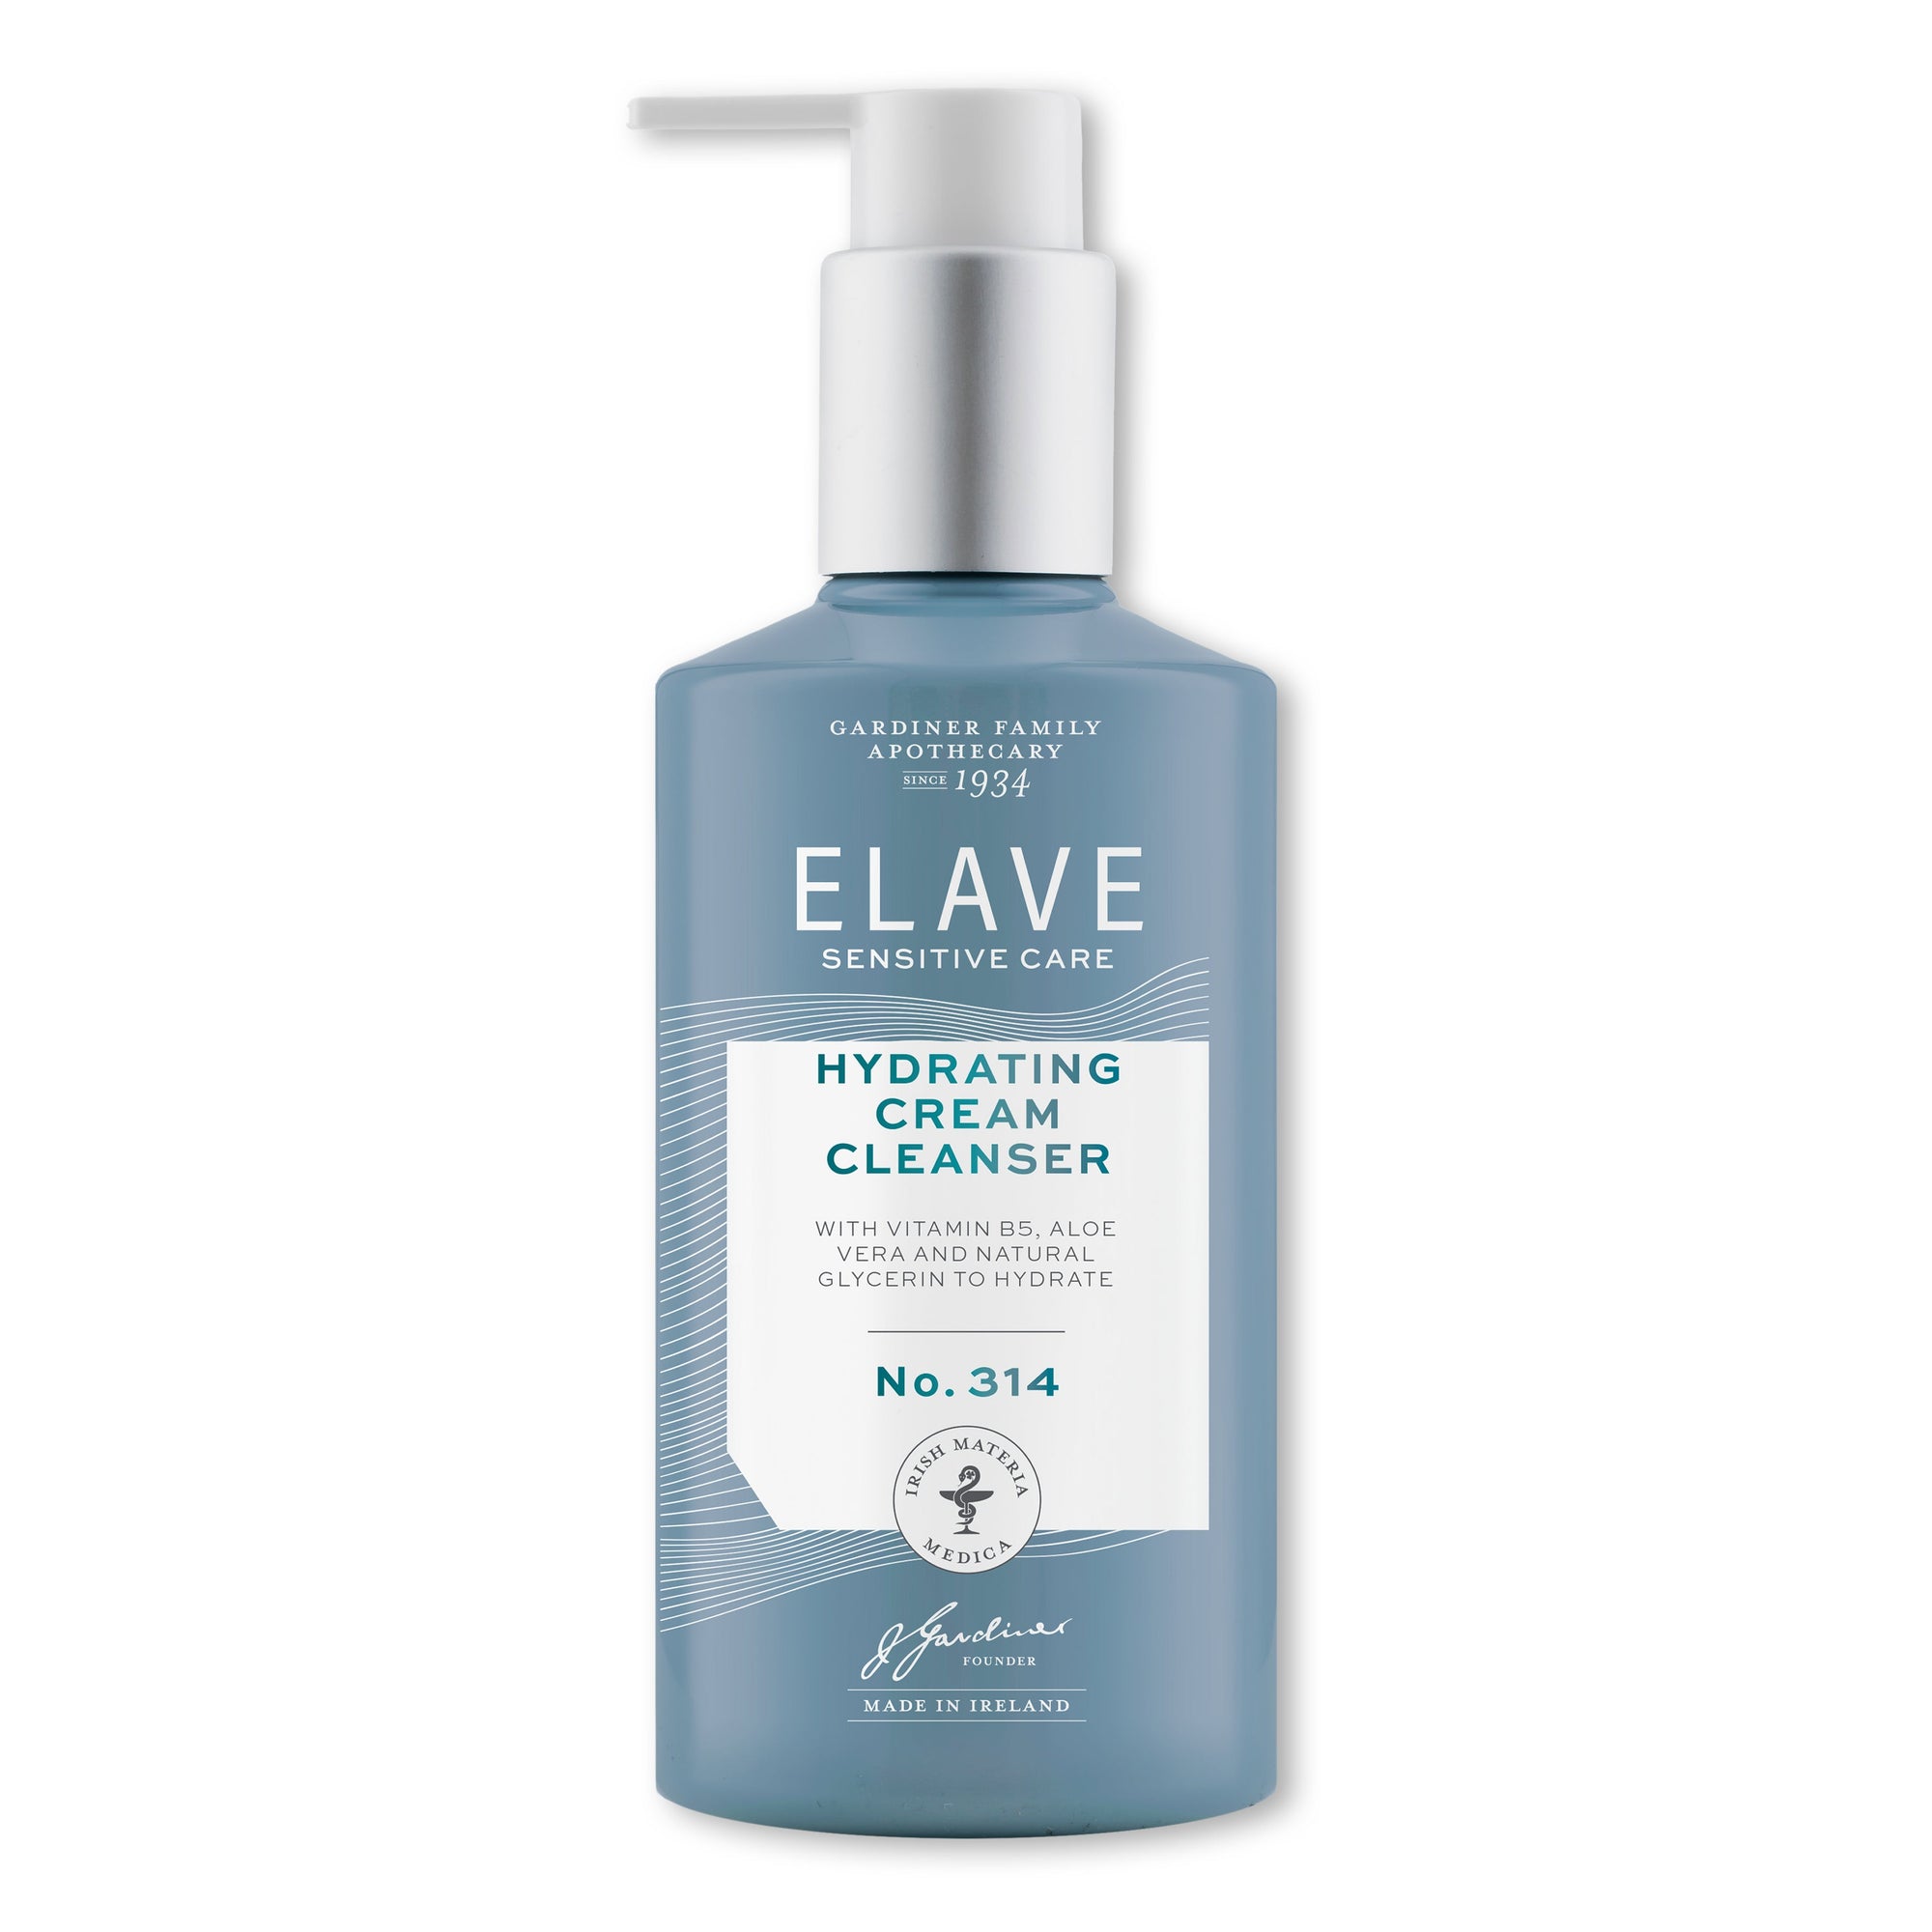 Elave 保濕潔面乳200毫升 (No.314) / Elave Hydrating Cream Cleanser No.314 200ml